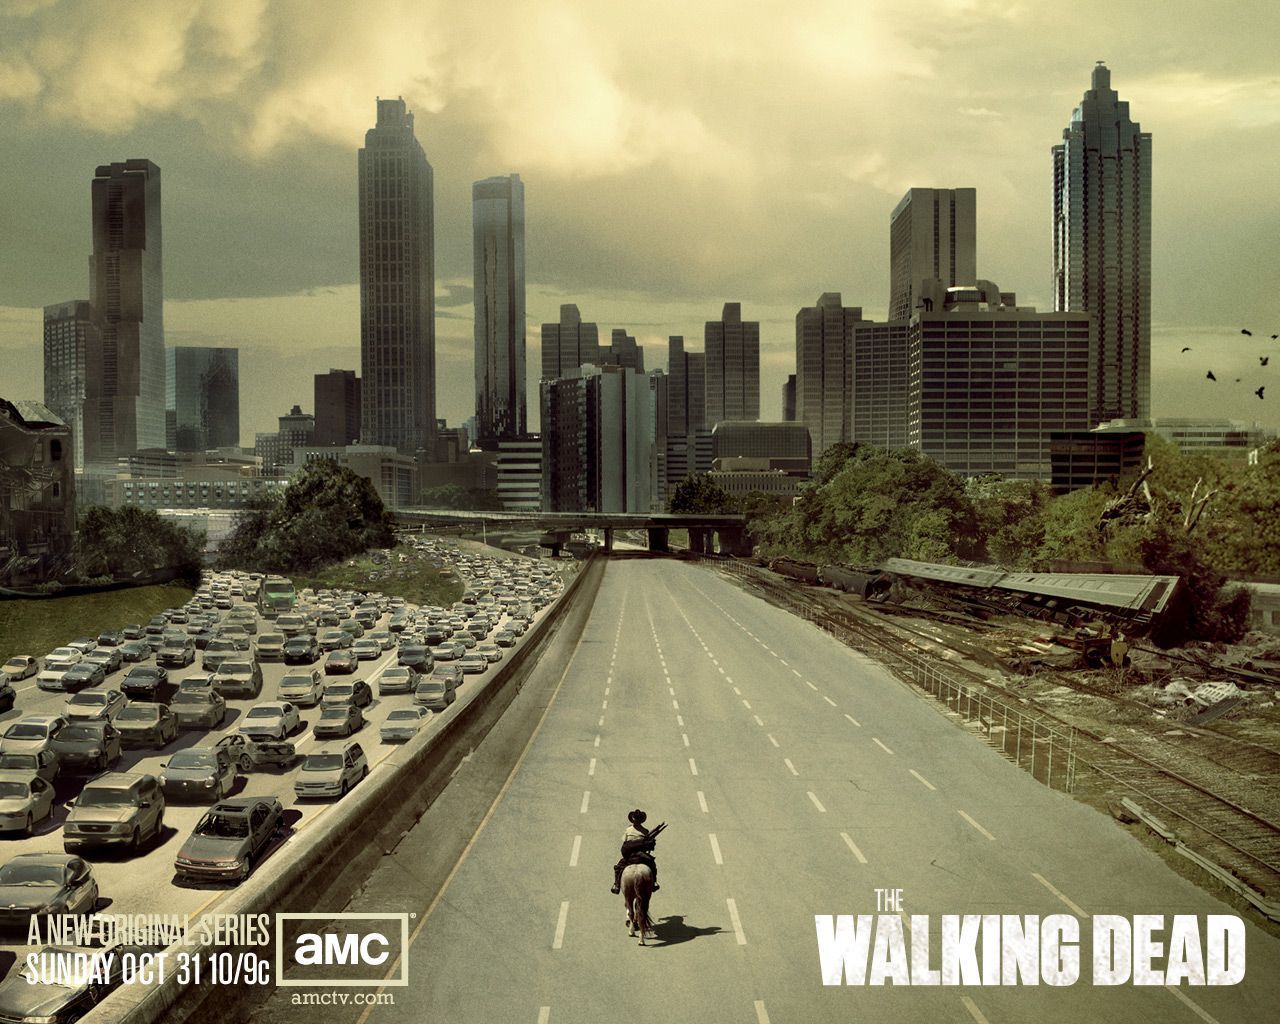 The Walking Dead wallpaper HD 2016 | Wallpapers, Backgrounds ...